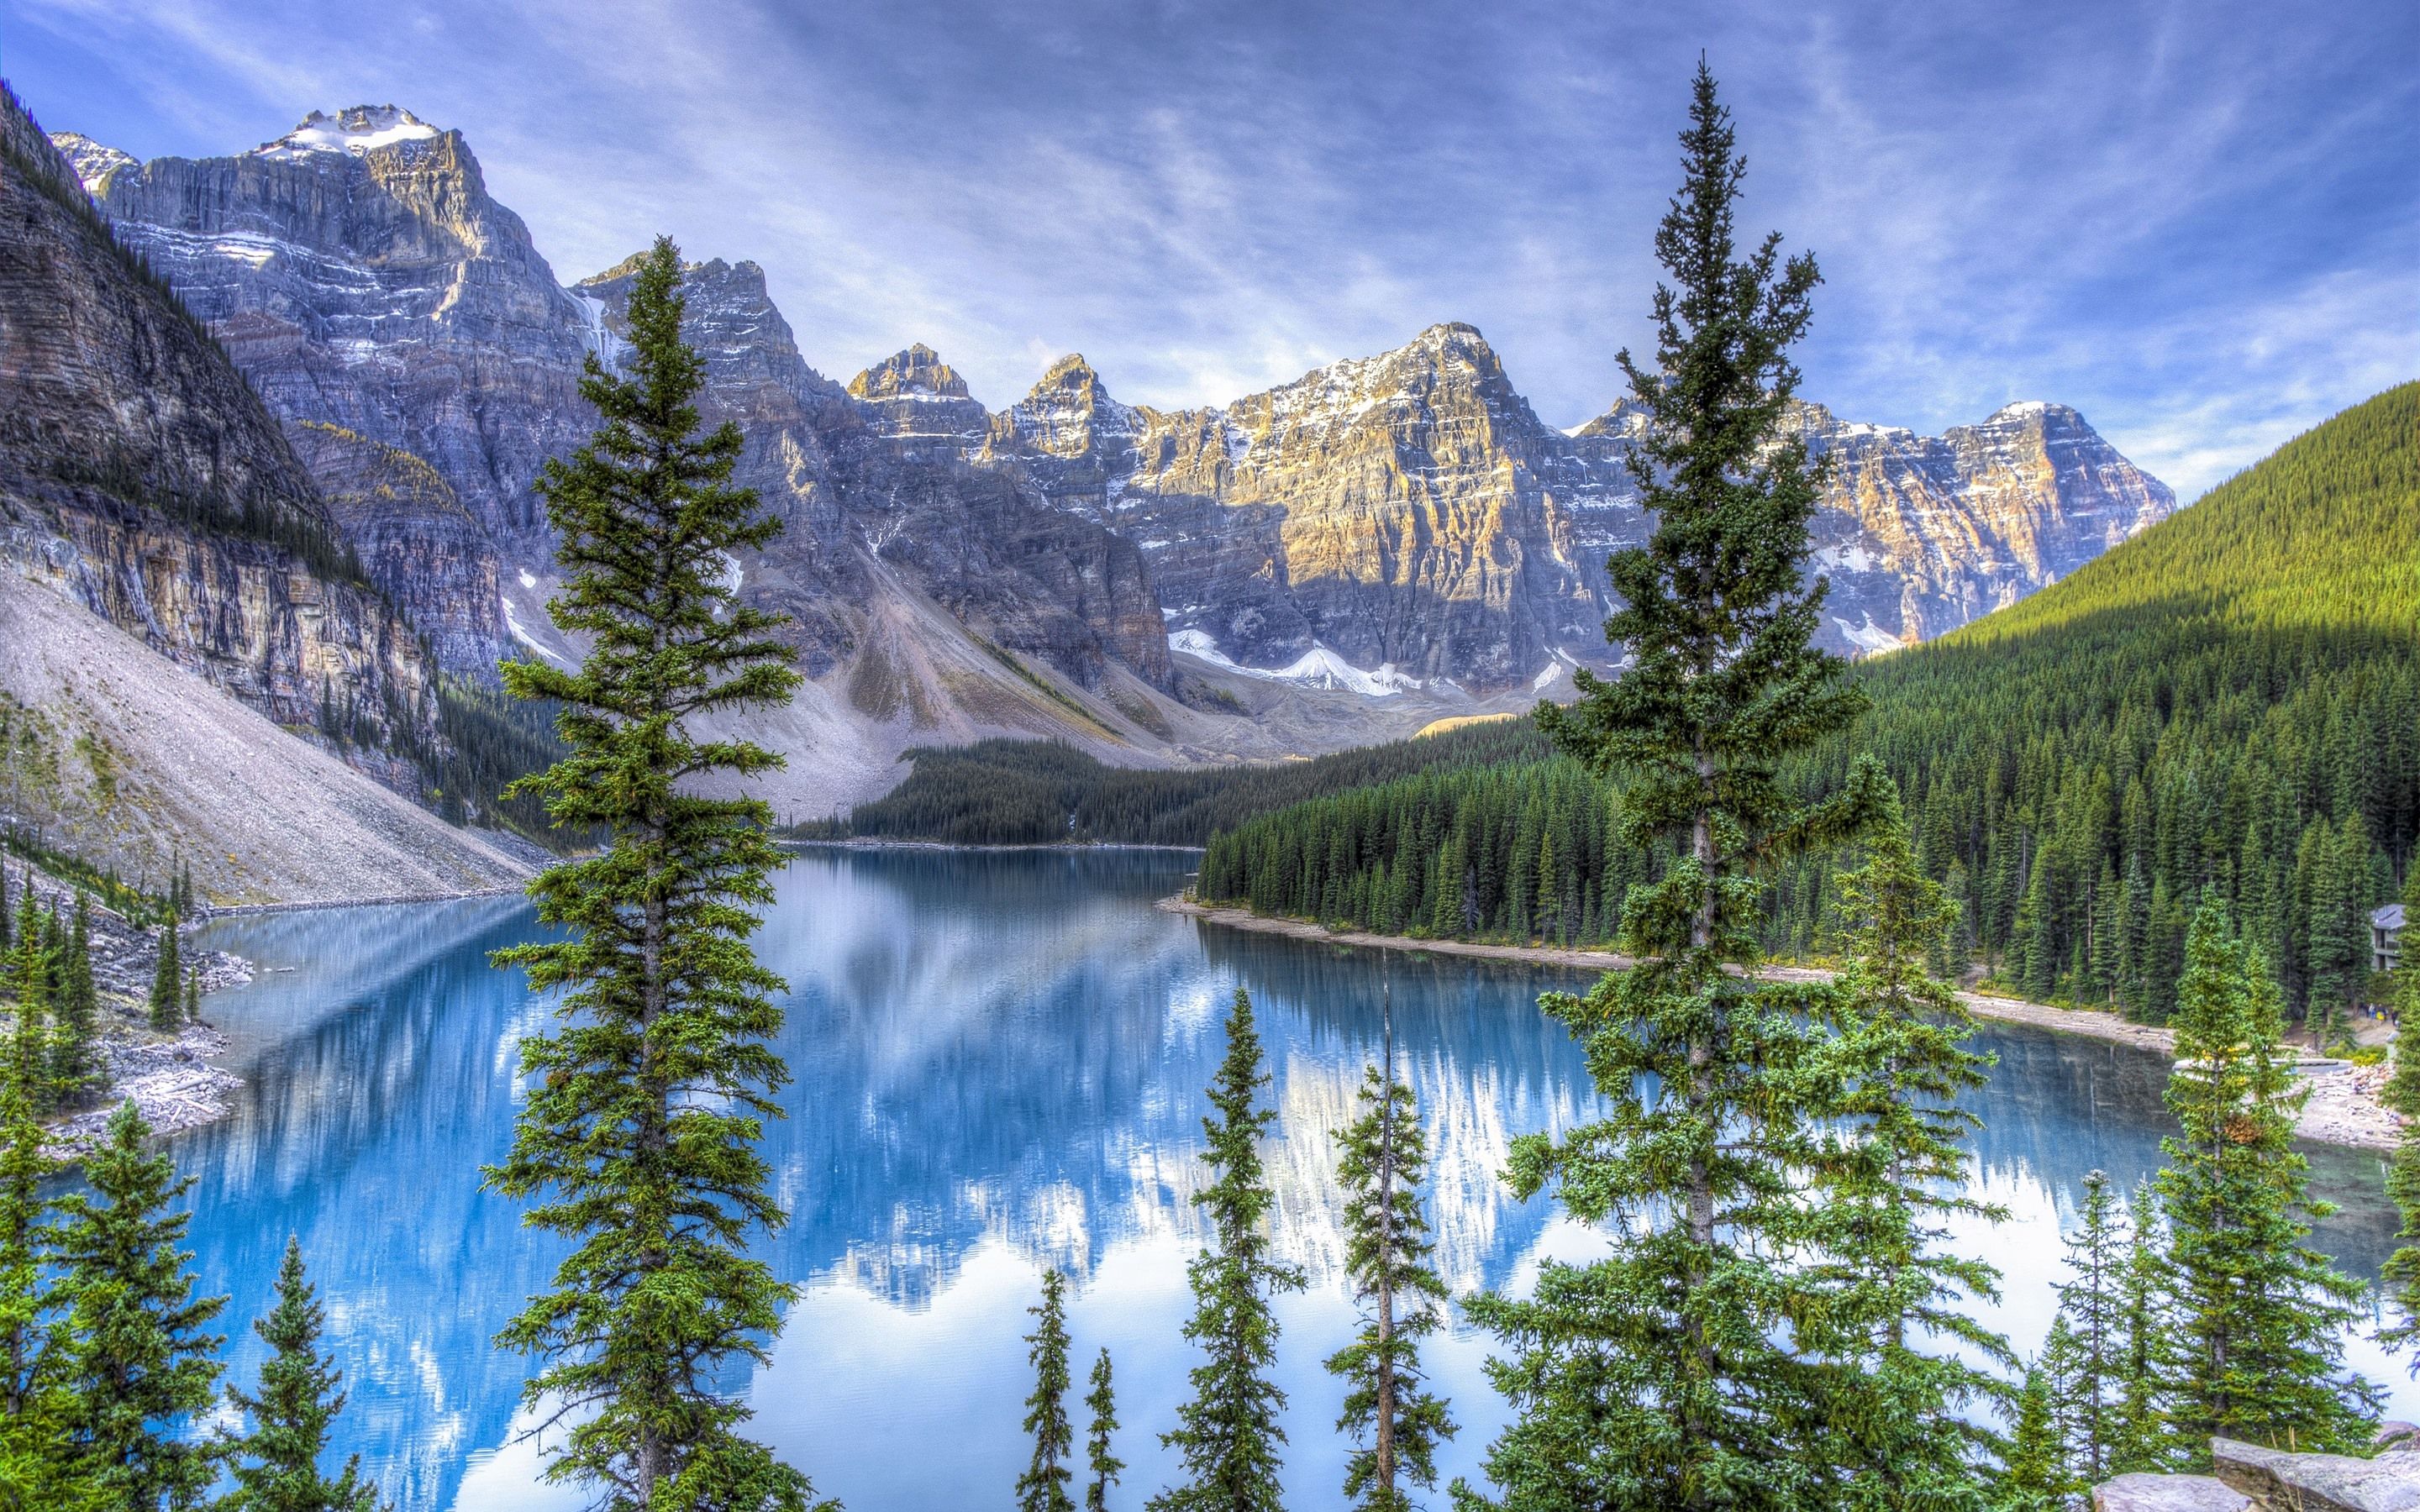  4k Natur Hintergrundbild 2880x1800. Kanada, See, Bäume, Berge, Naturlandschaft 3840x2160 UHD 4K Hintergrundbilder, HD, Bild